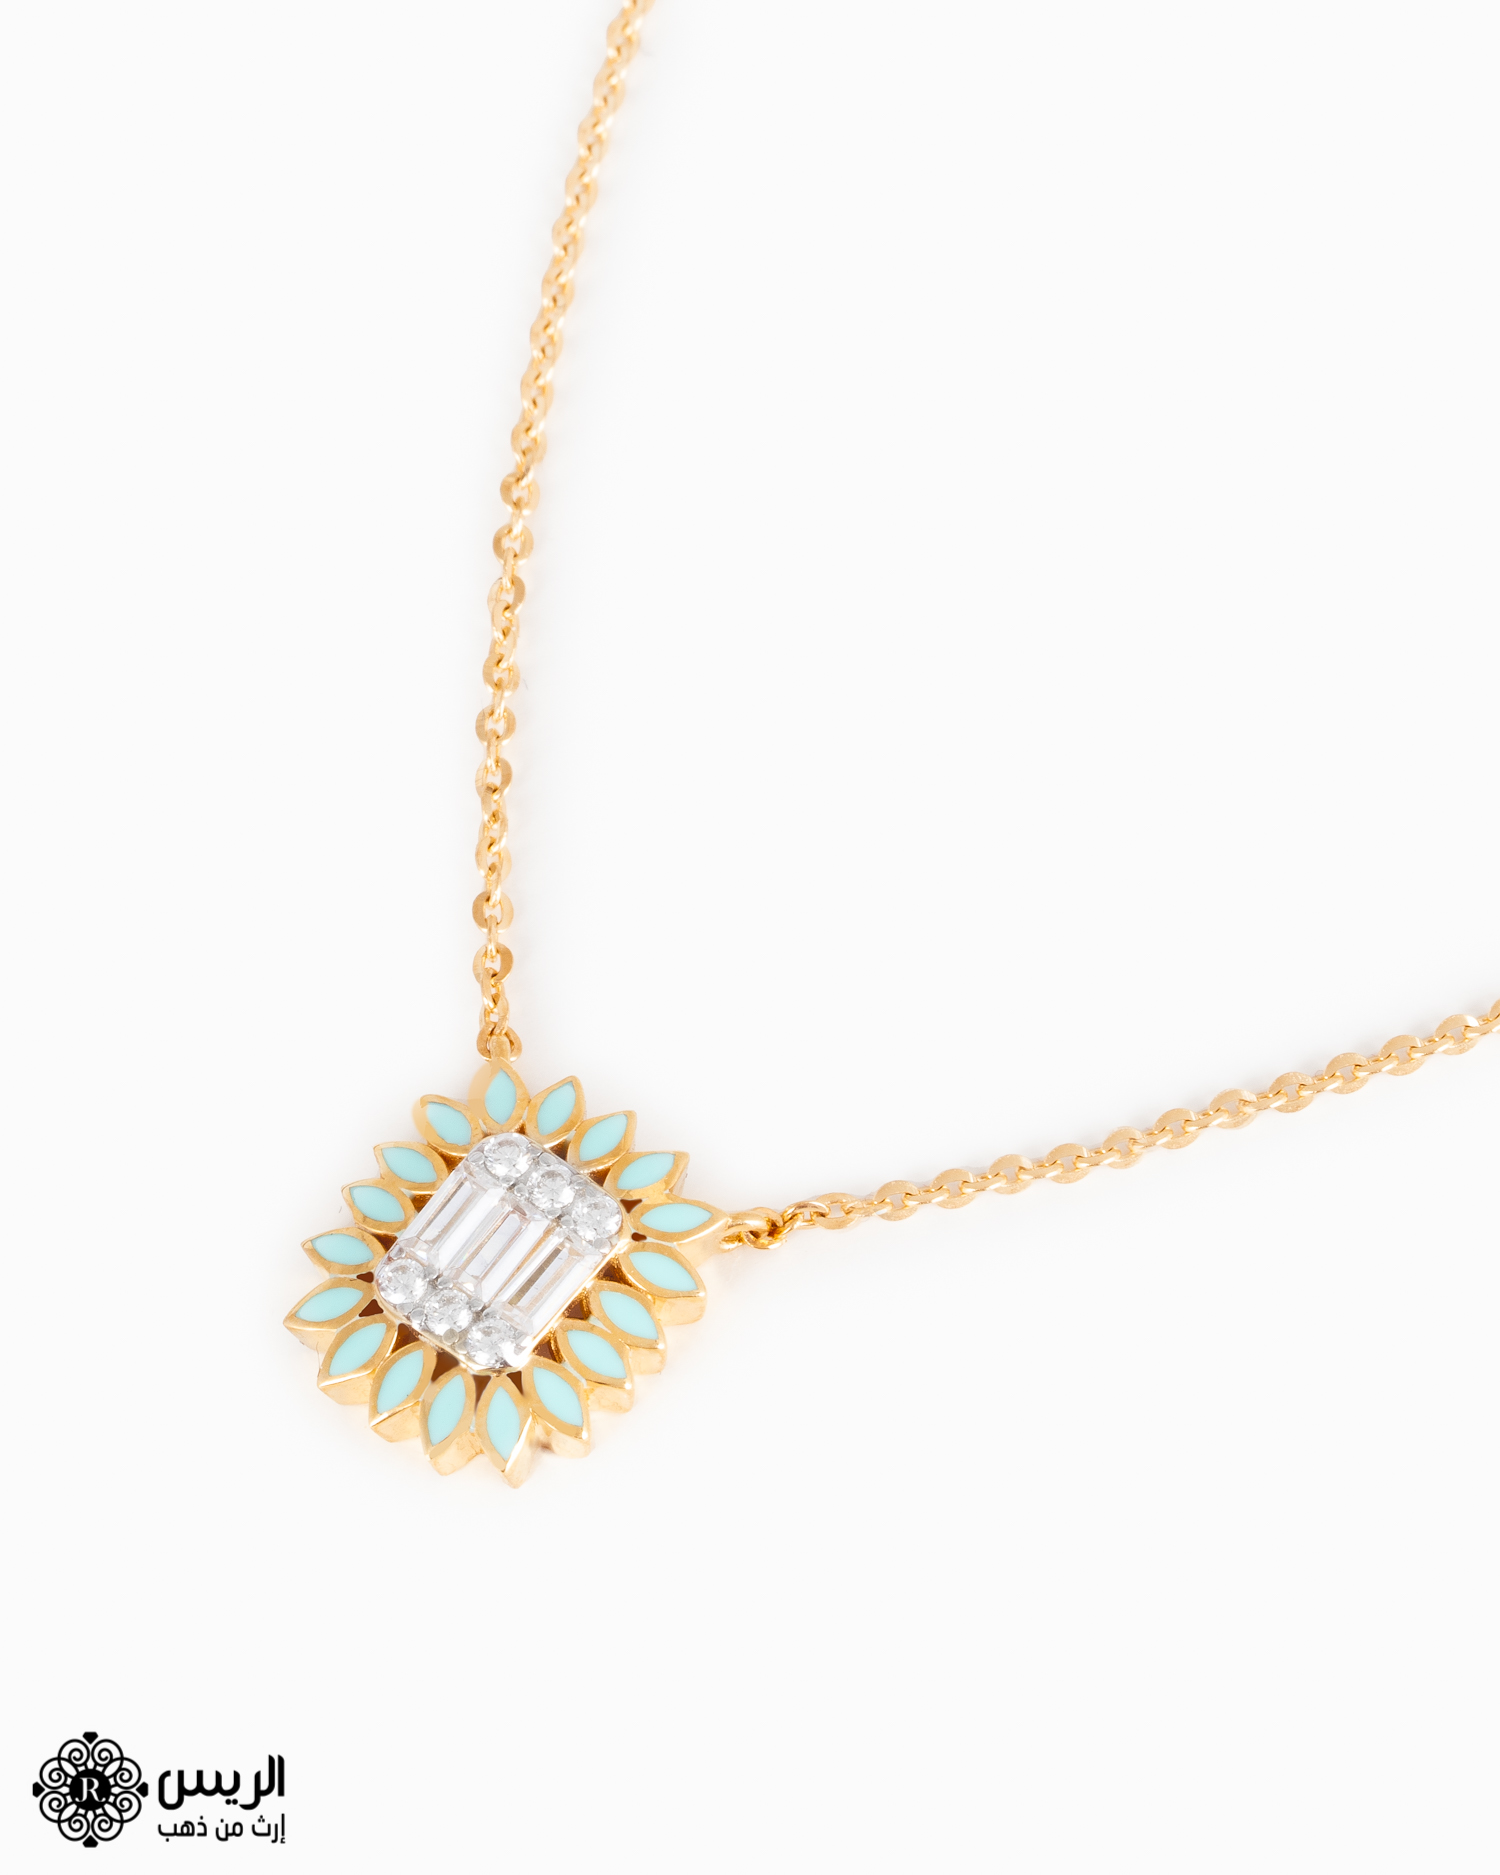 Raies jewelry Pendant with Chain Elegant تعليقة مع سلسله ناعمة الريس للمجوهرات